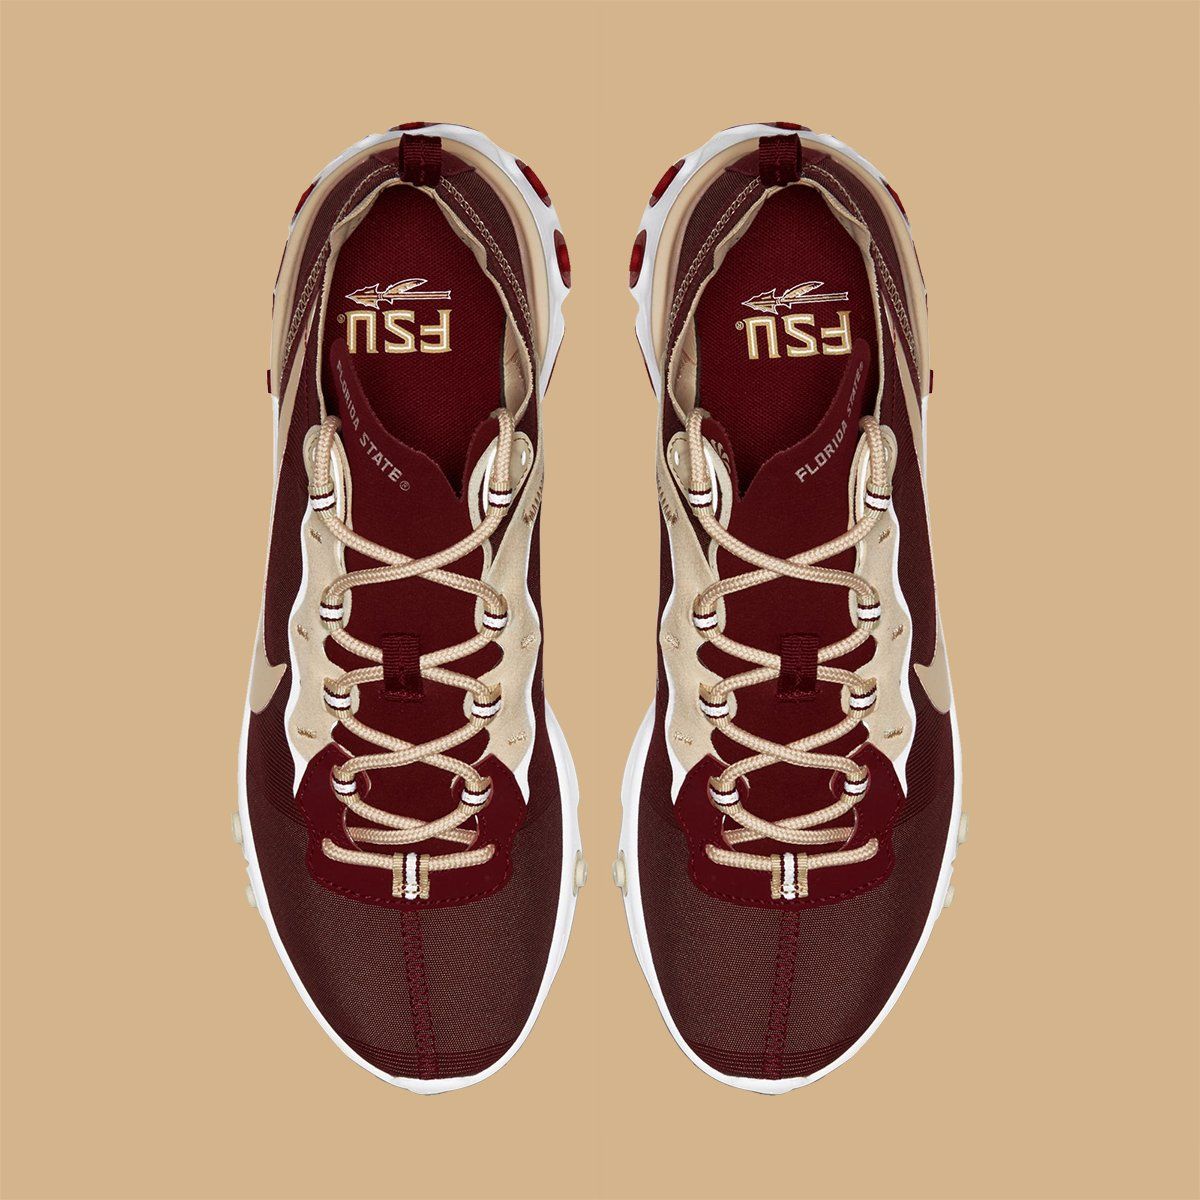 fsu nike shoes 2019